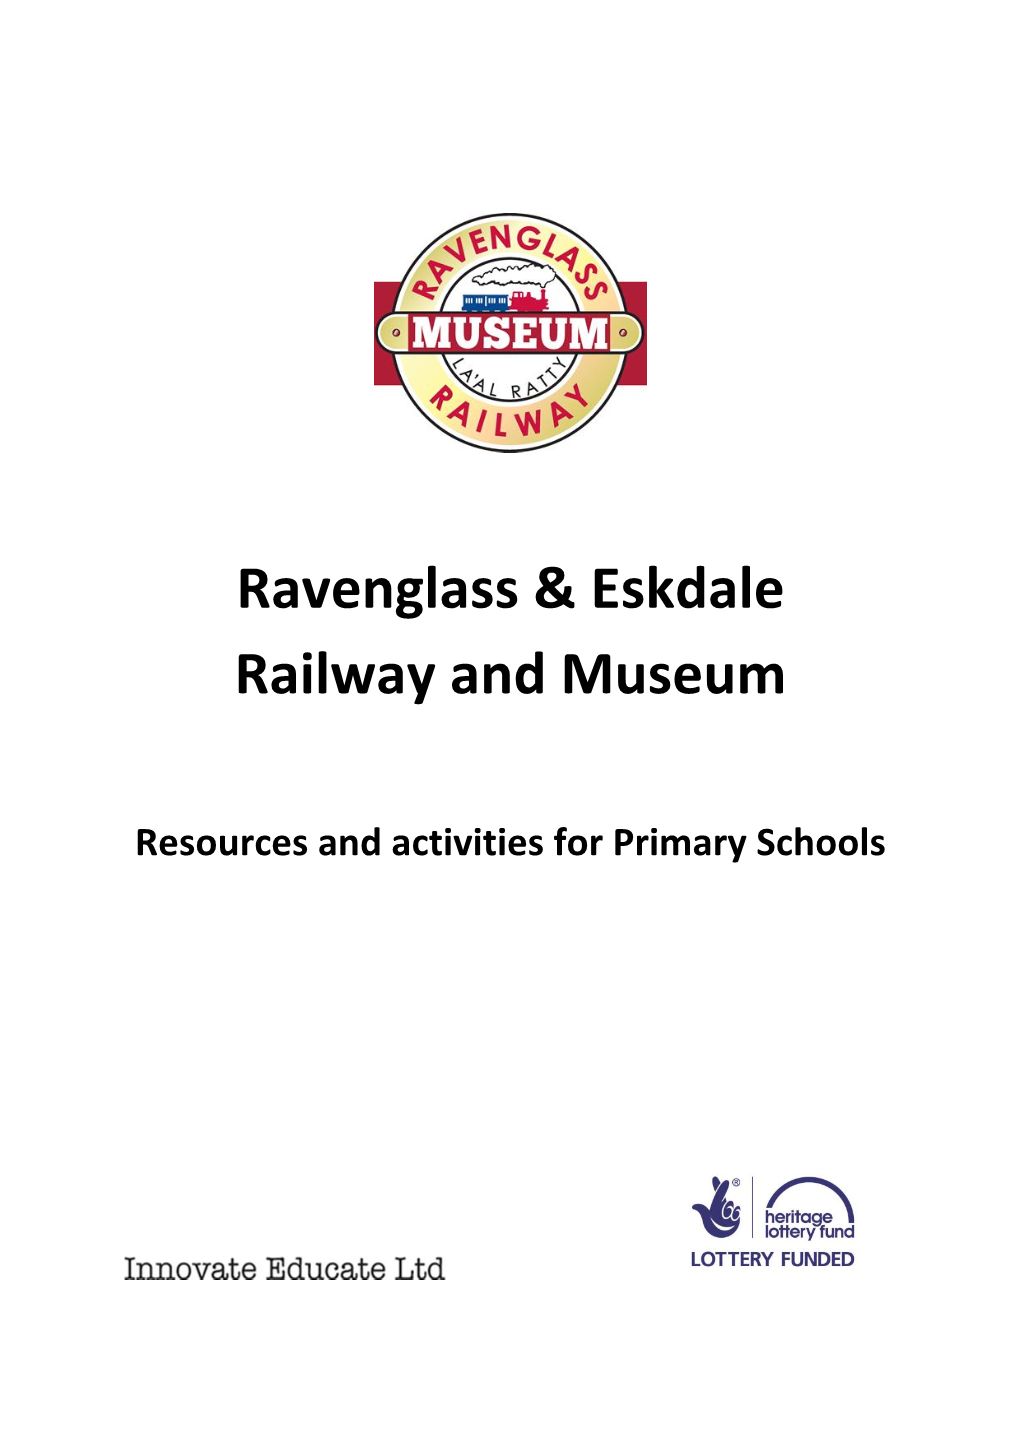 Ravenglass & Eskdale Railway and Museum